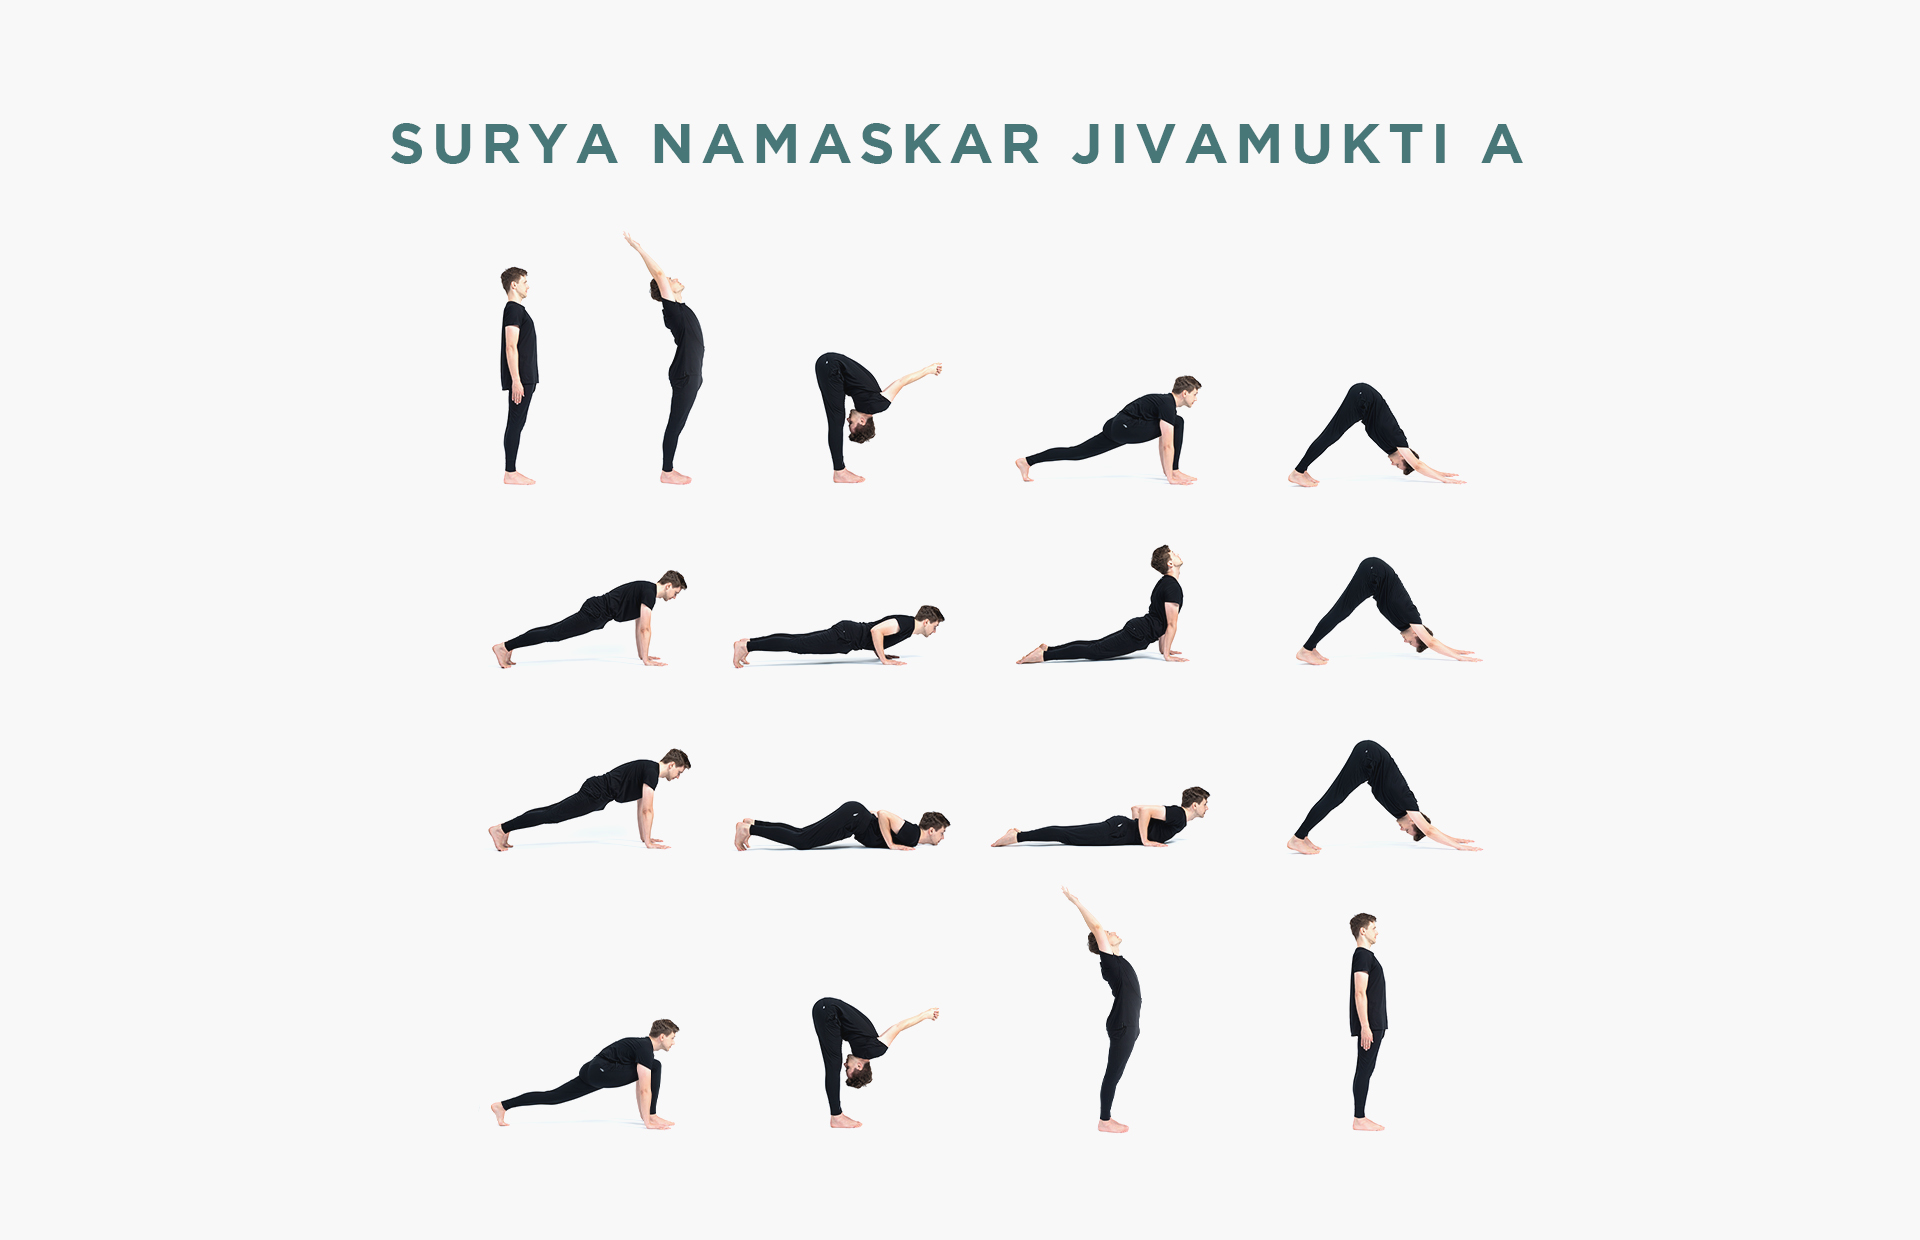 Surya Namaskar Jivamukti A sequence chart